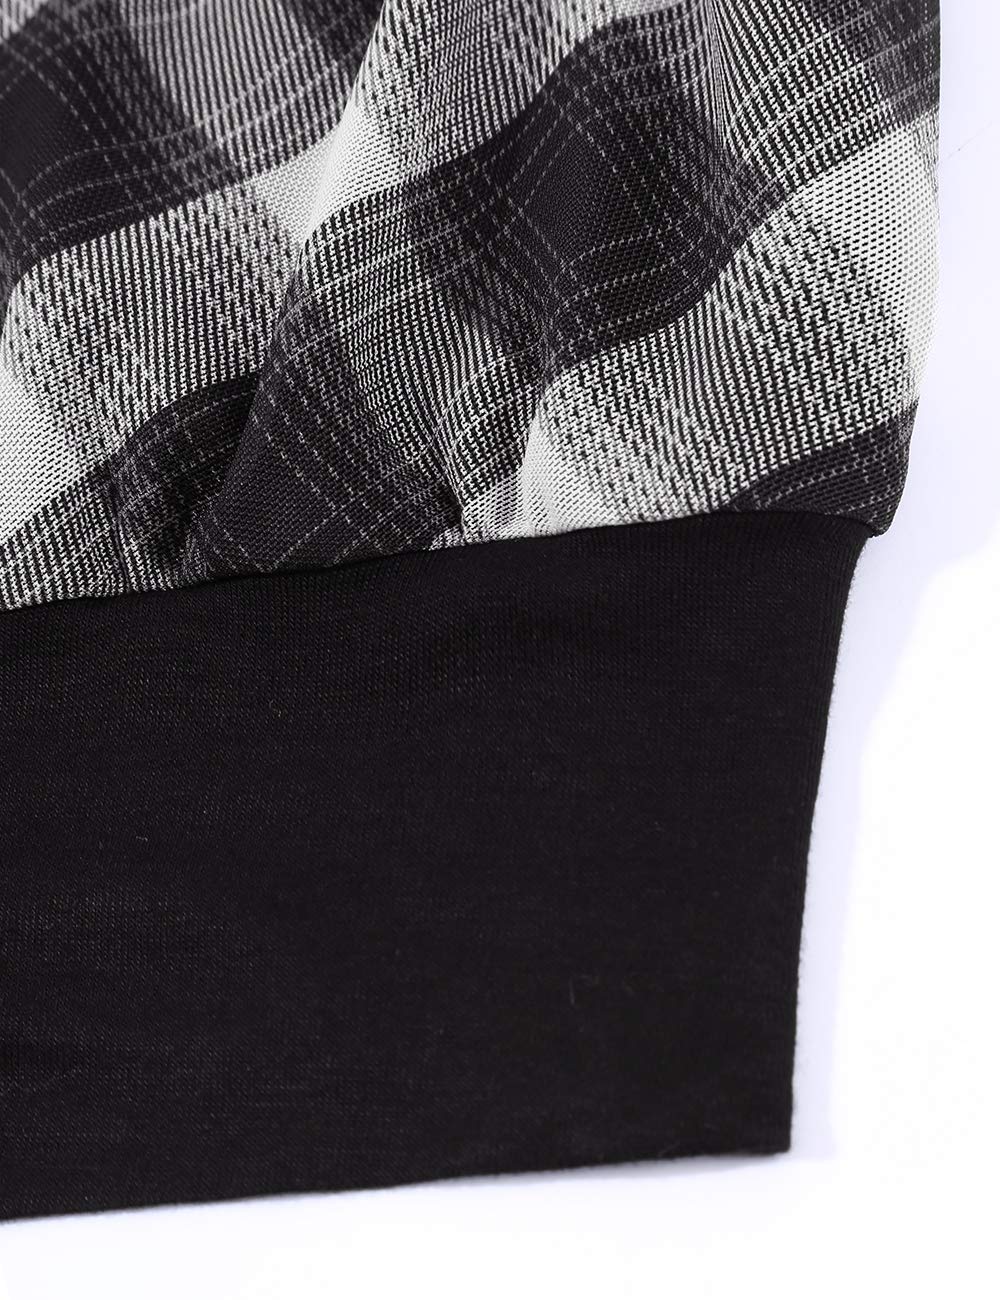 BAISHENGGT Black White Plaid Women's Printed Flouncing Flared Short Sleeve Mesh Blouse Tops